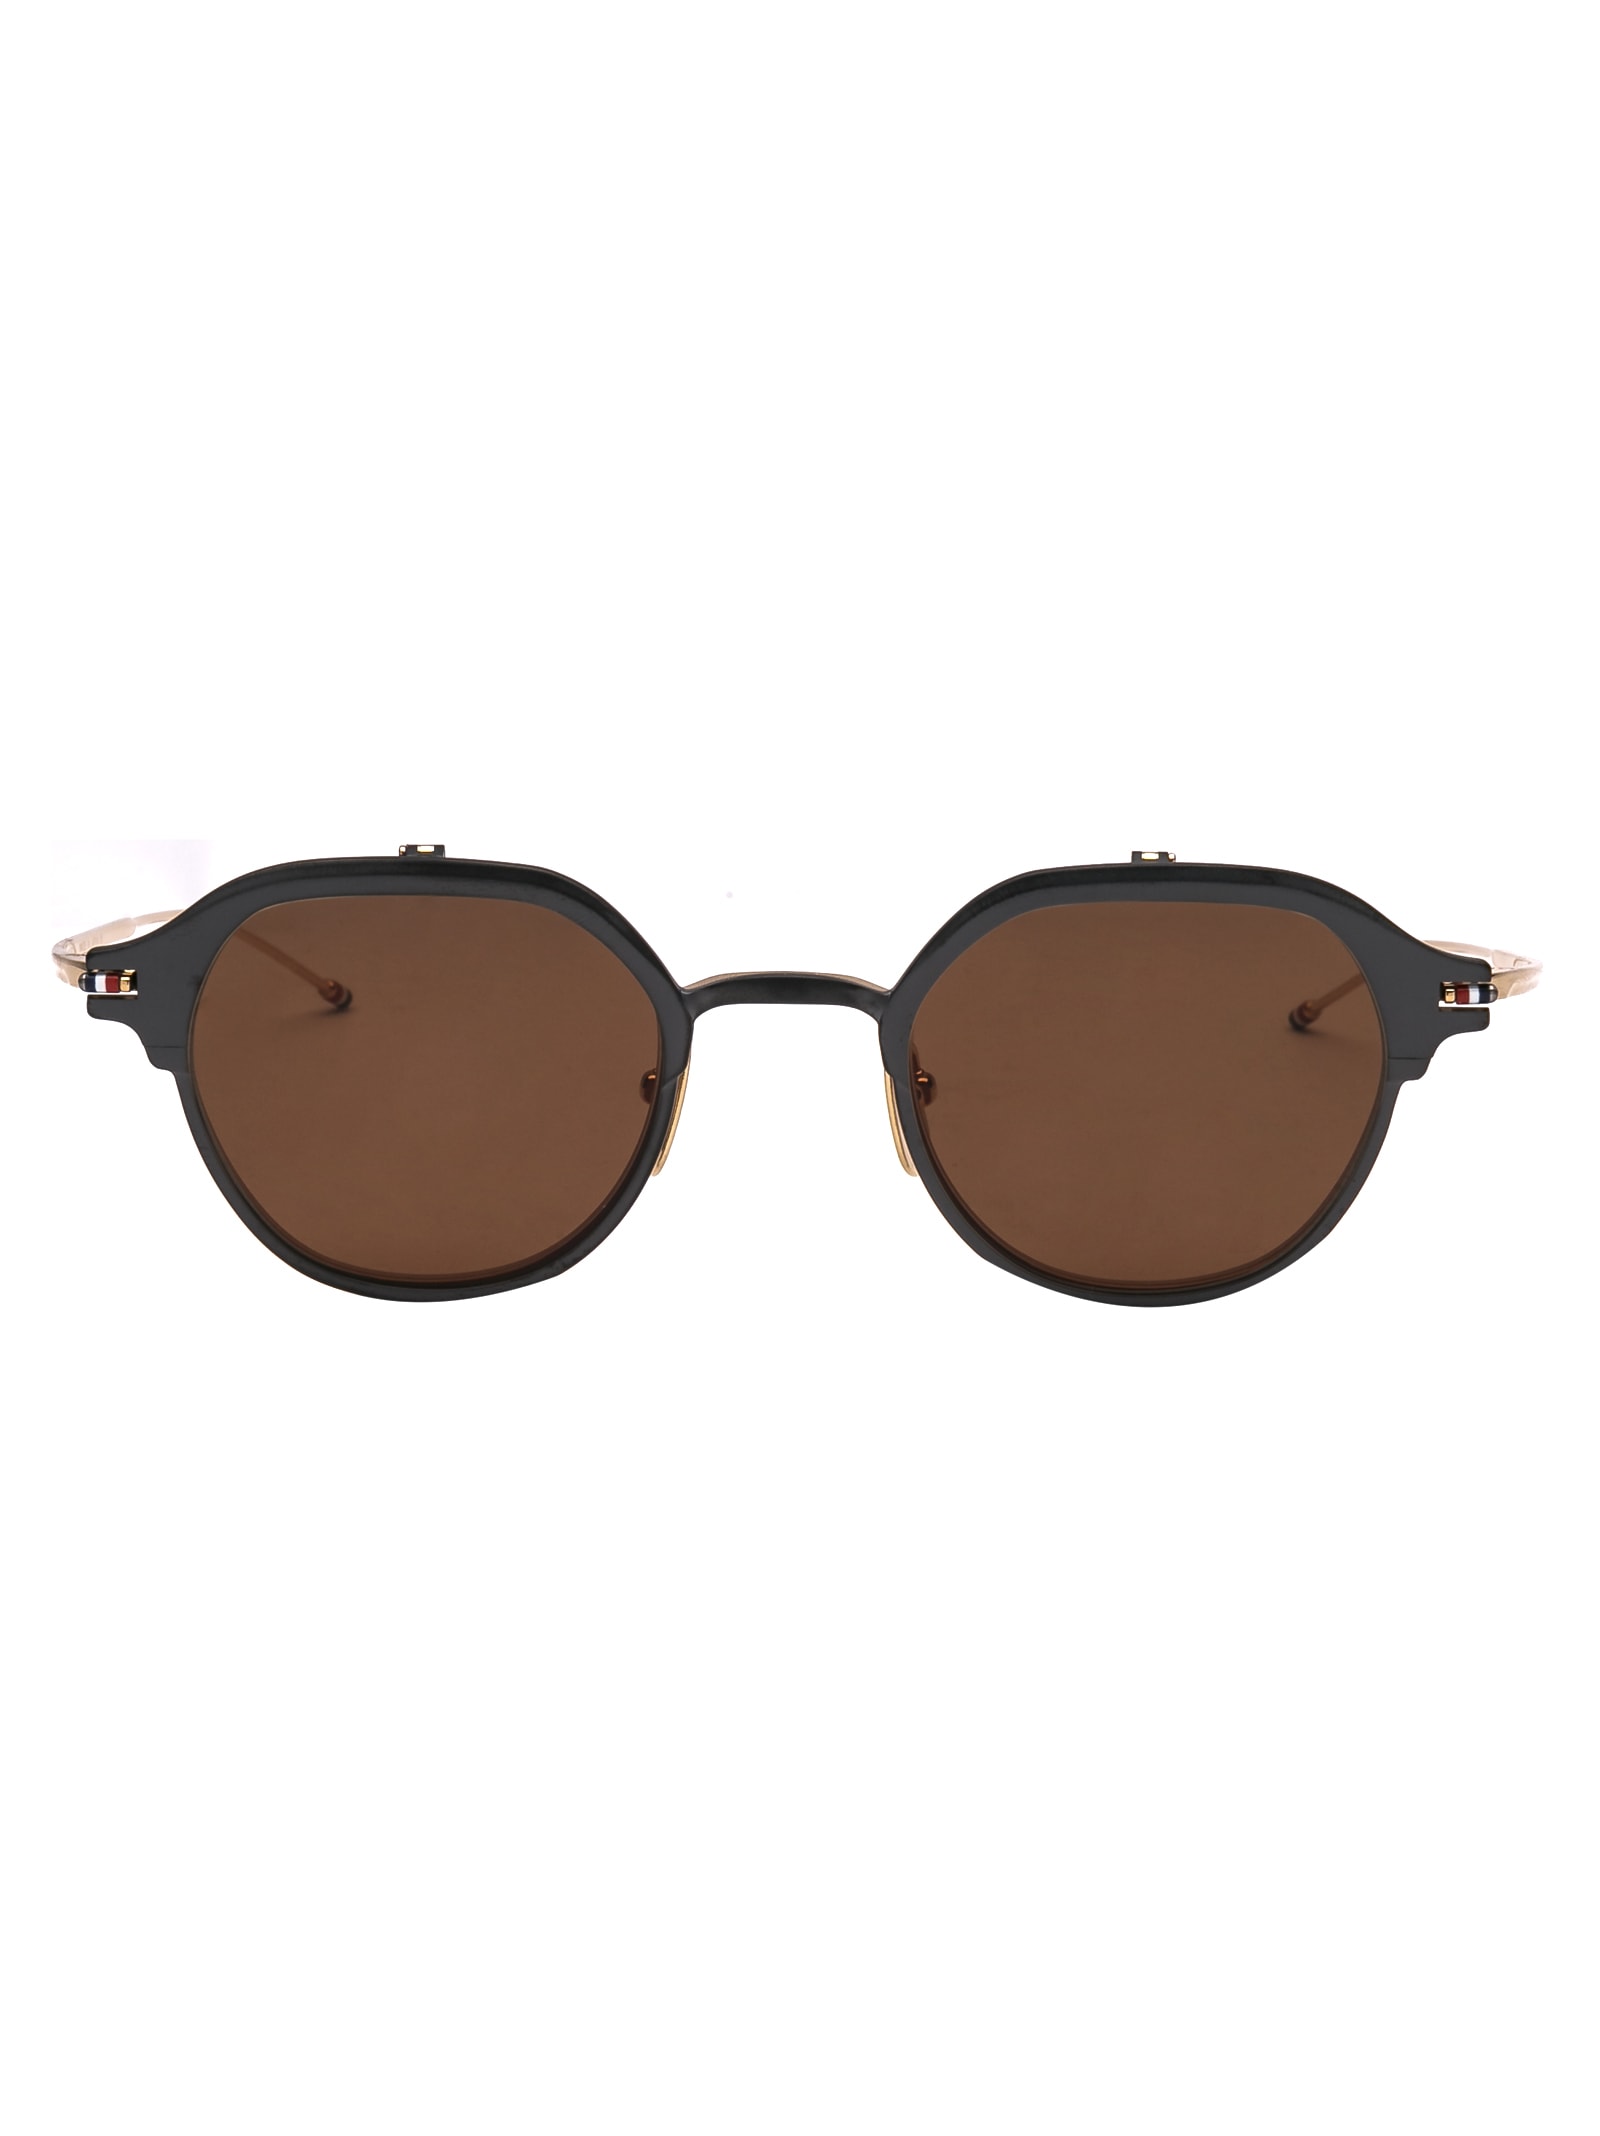 Thom Browne Tb-812 Sunglasses In Black Iron - White Gold W/ Dark Brown - Ar